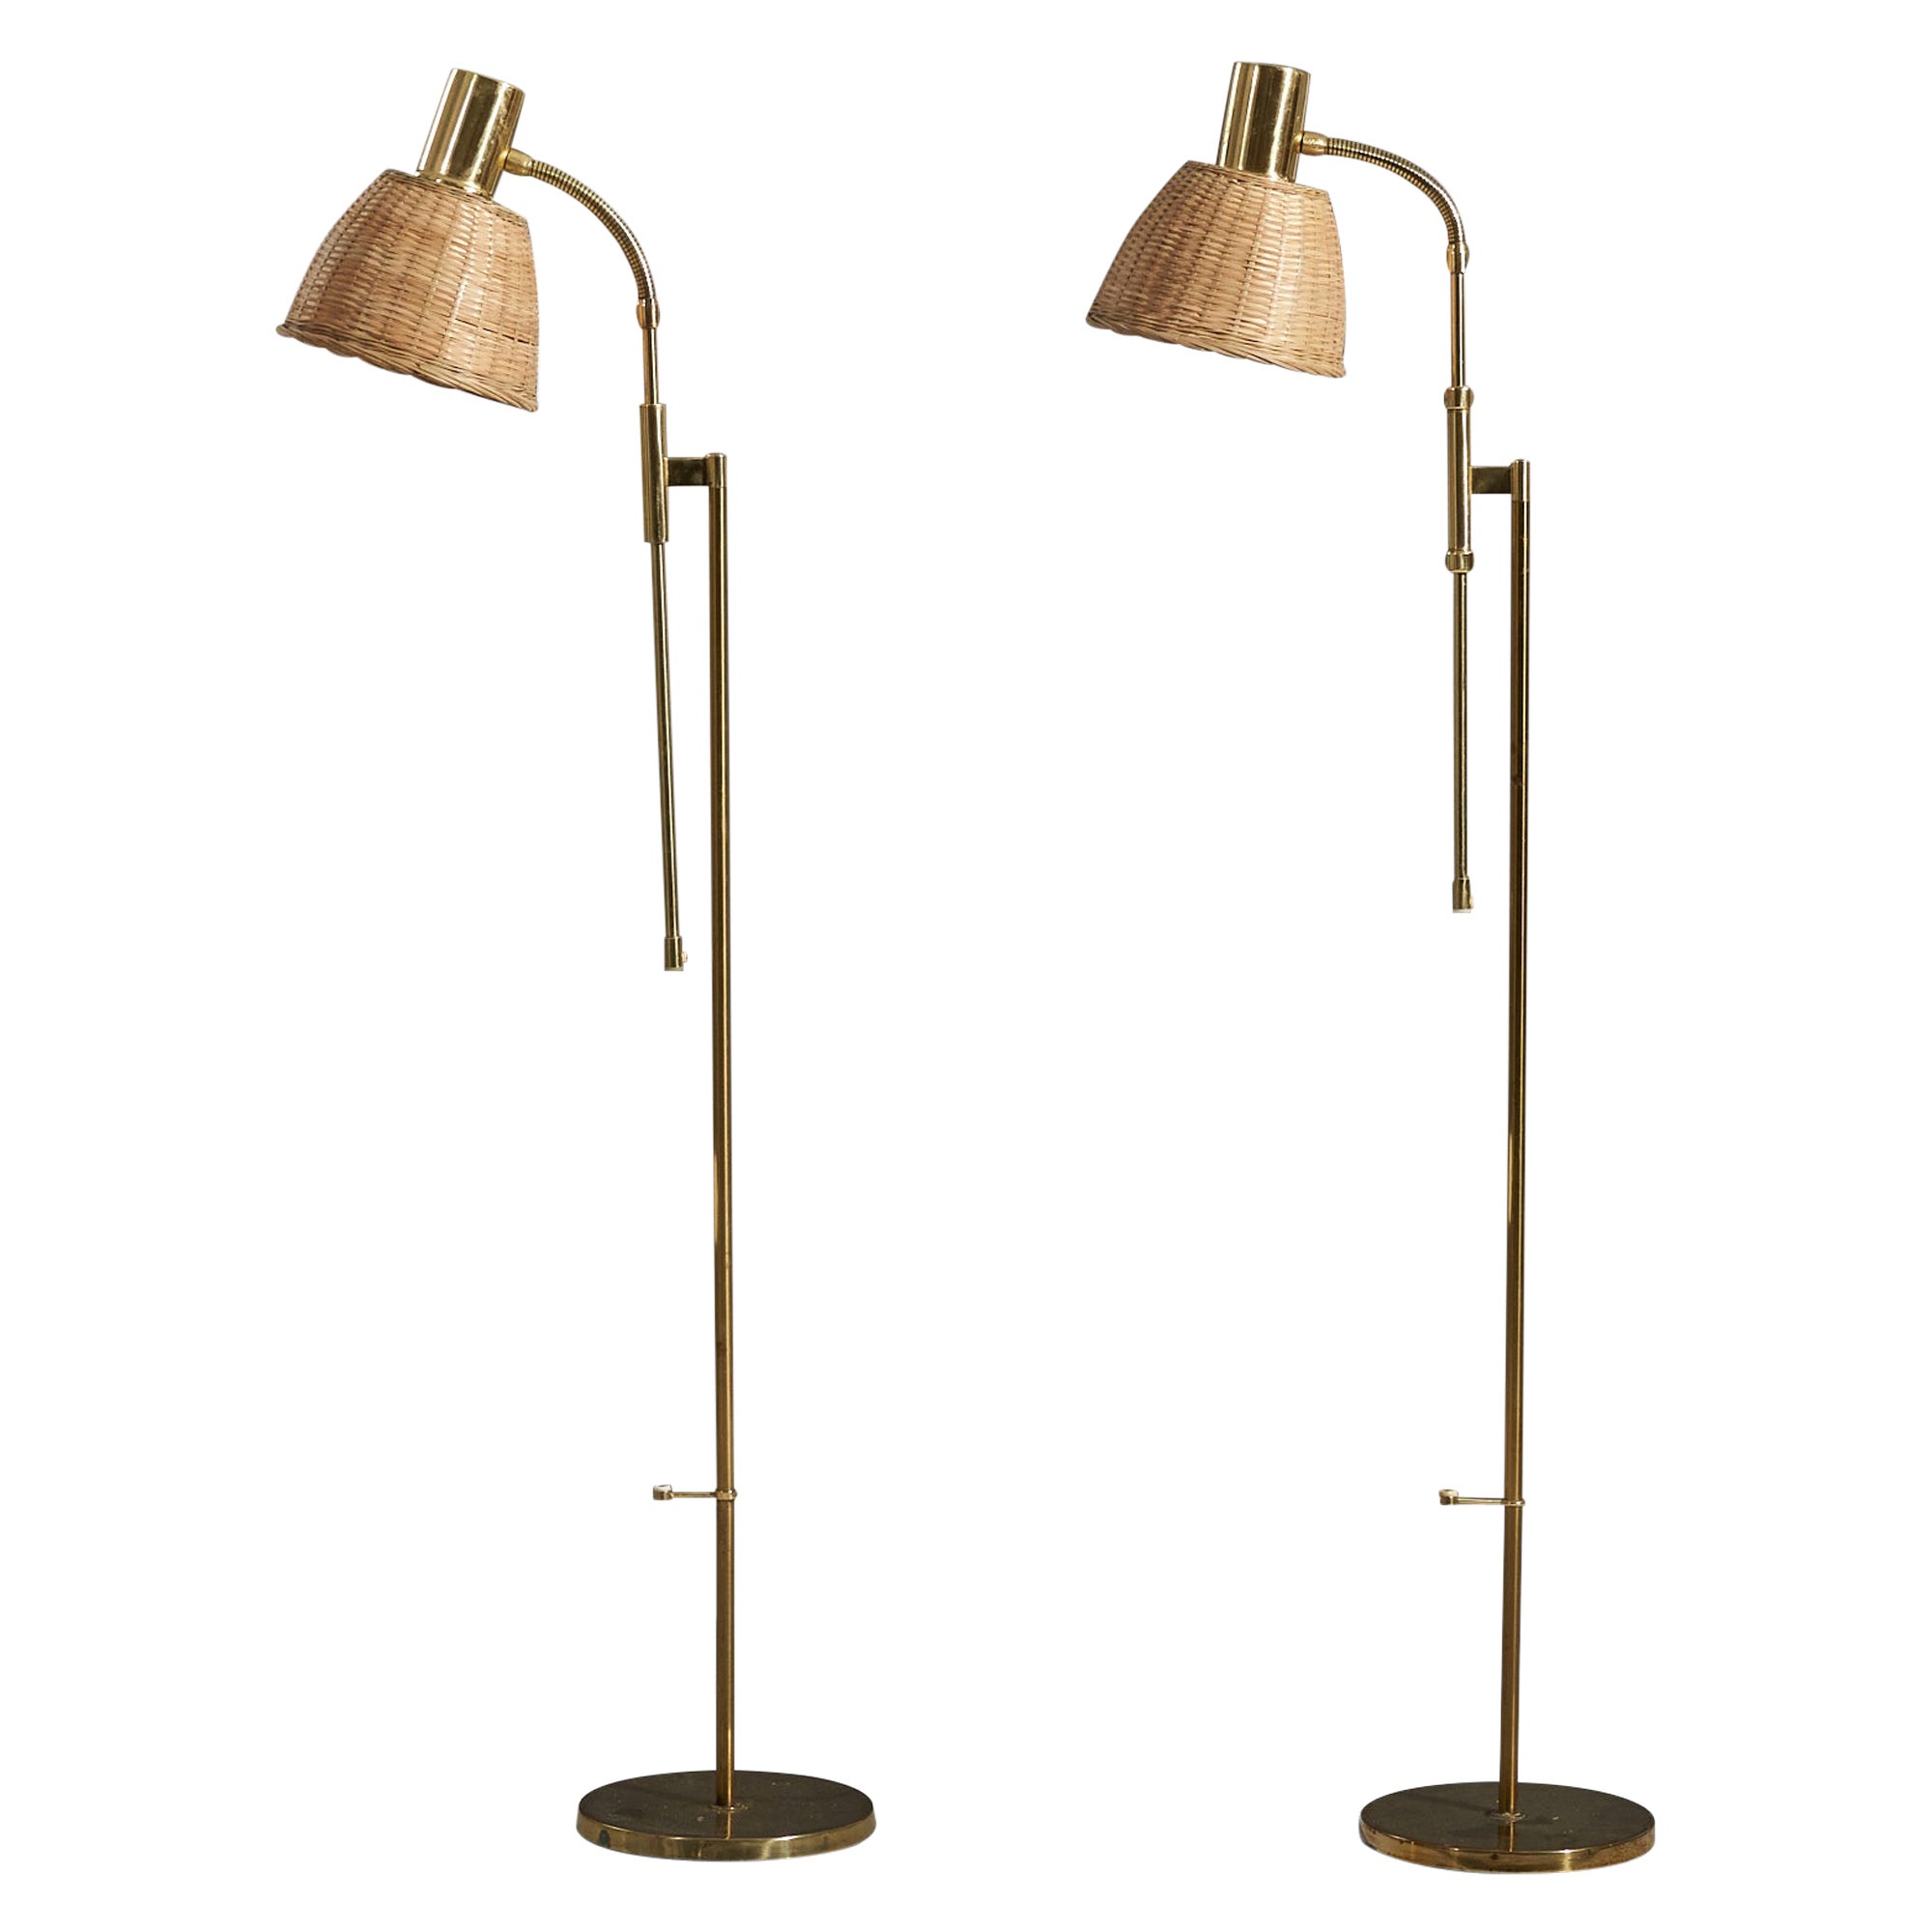 Falkenbergs Belysning, Pair of Floor Lamps, Brass, Rattan, Sweden, 1970s